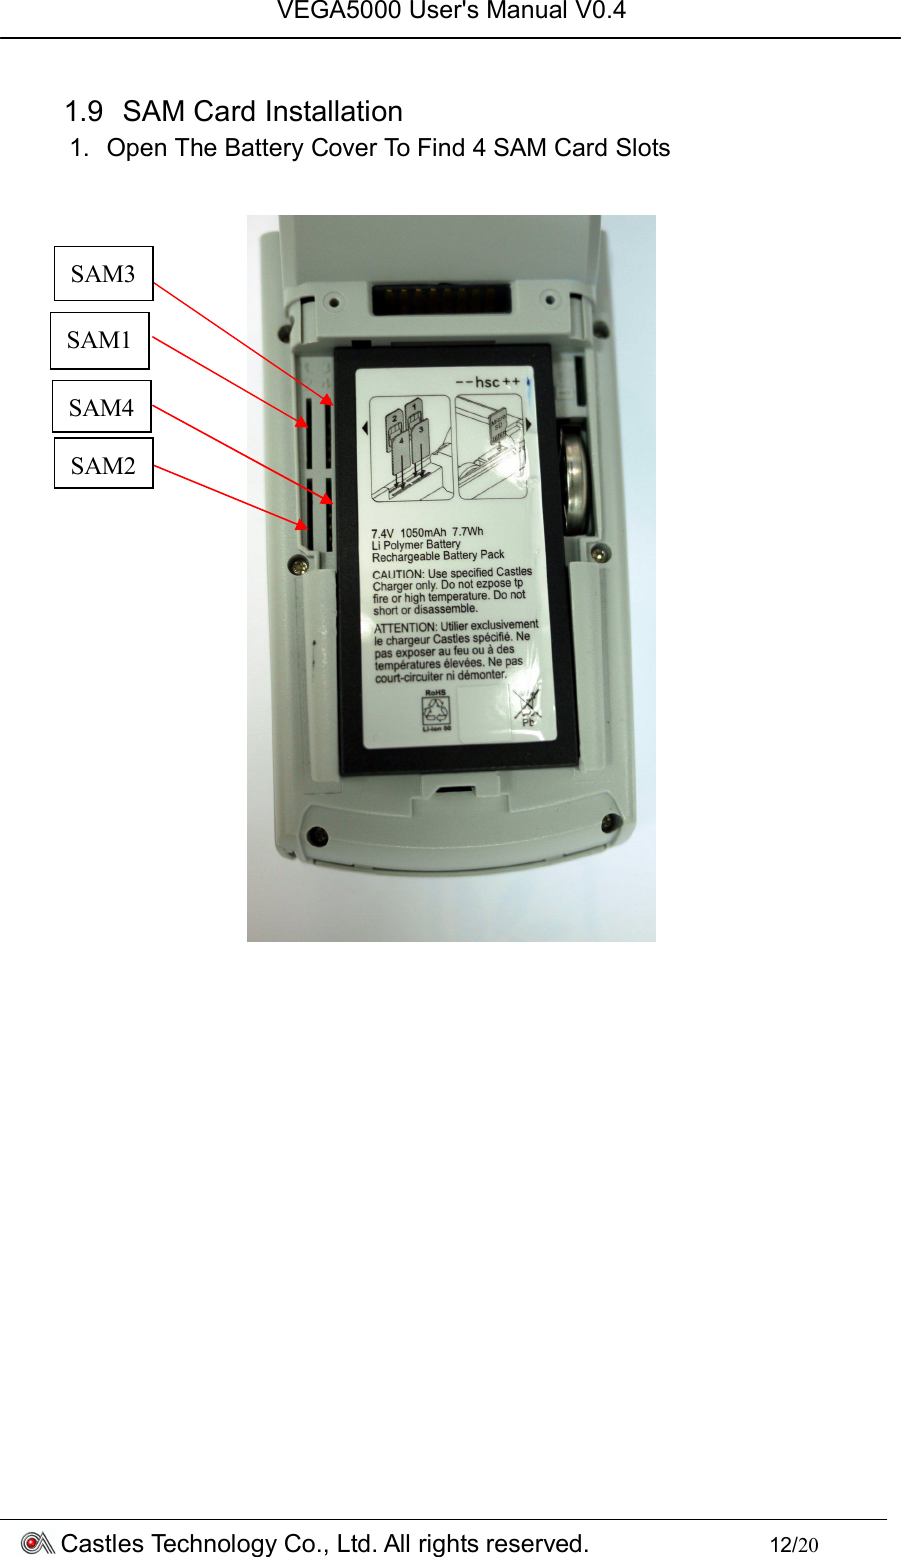 VEGA5000 User&apos;s Manual V0.4 Castles Technology Co., Ltd. All rights reserved.        12/20  1.9  SAM Card Installation 1.  Open The Battery Cover To Find 4 SAM Card Slots                  SAM1 SAM4 SAM2 SAM3 